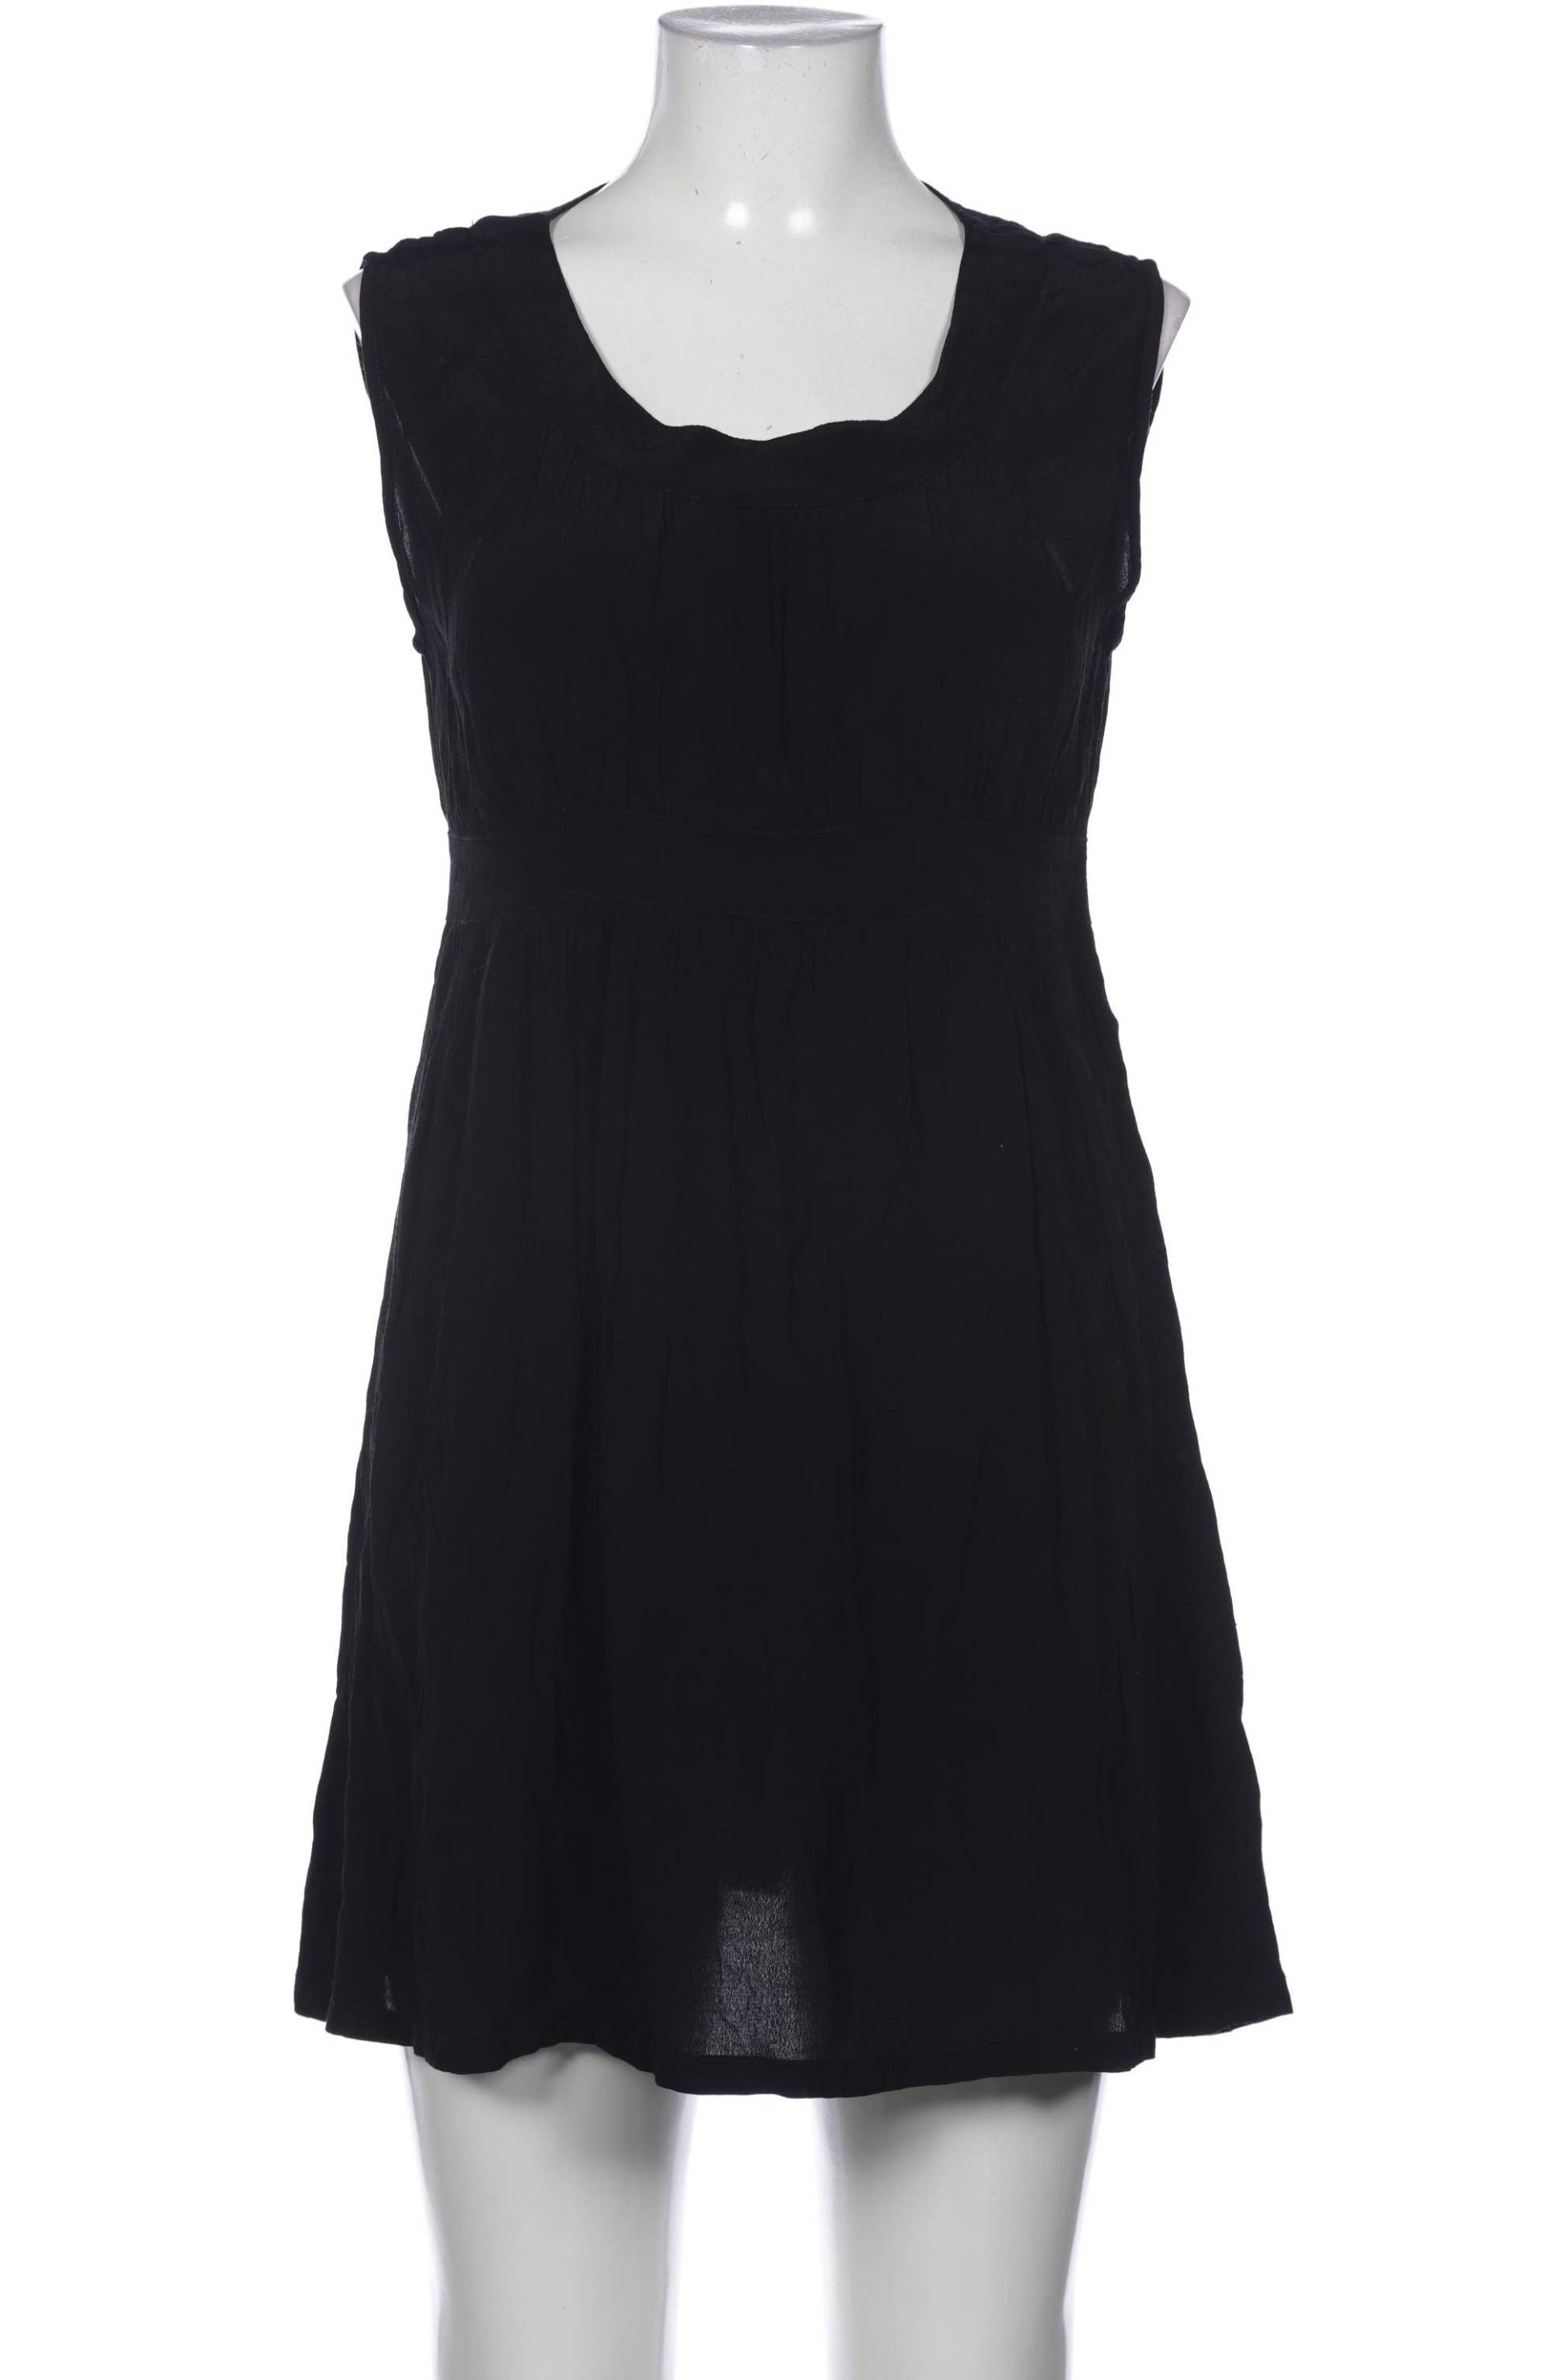 The MASAI Clothing Company Damen Kleid, schwarz von The MASAI Clothing Company